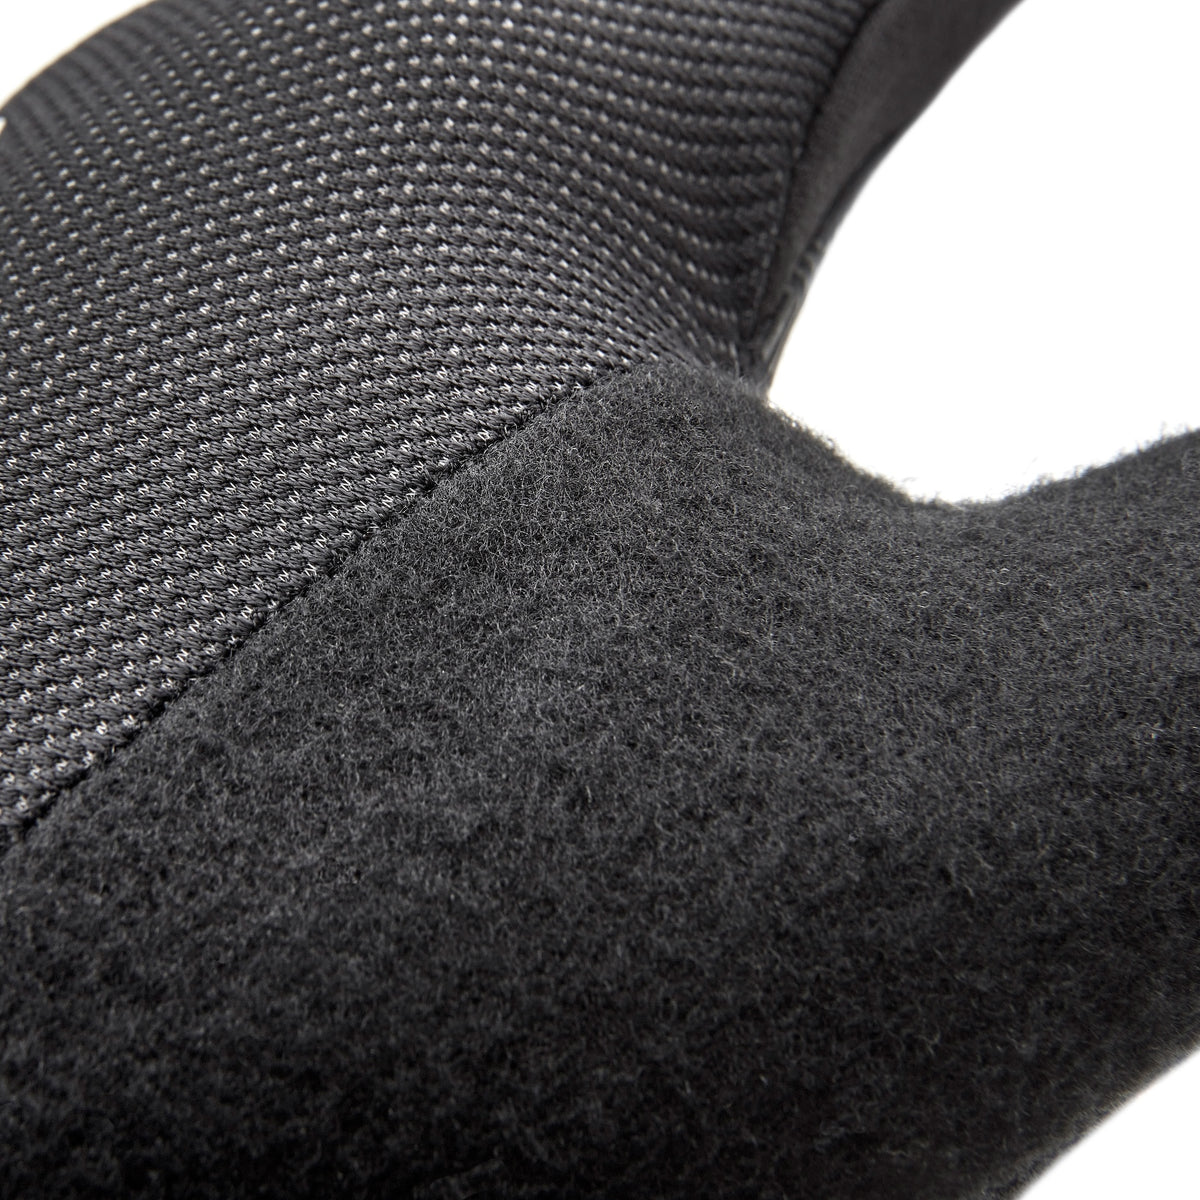 adidas Full-Finger Essential Gloves black thumb texture closeup